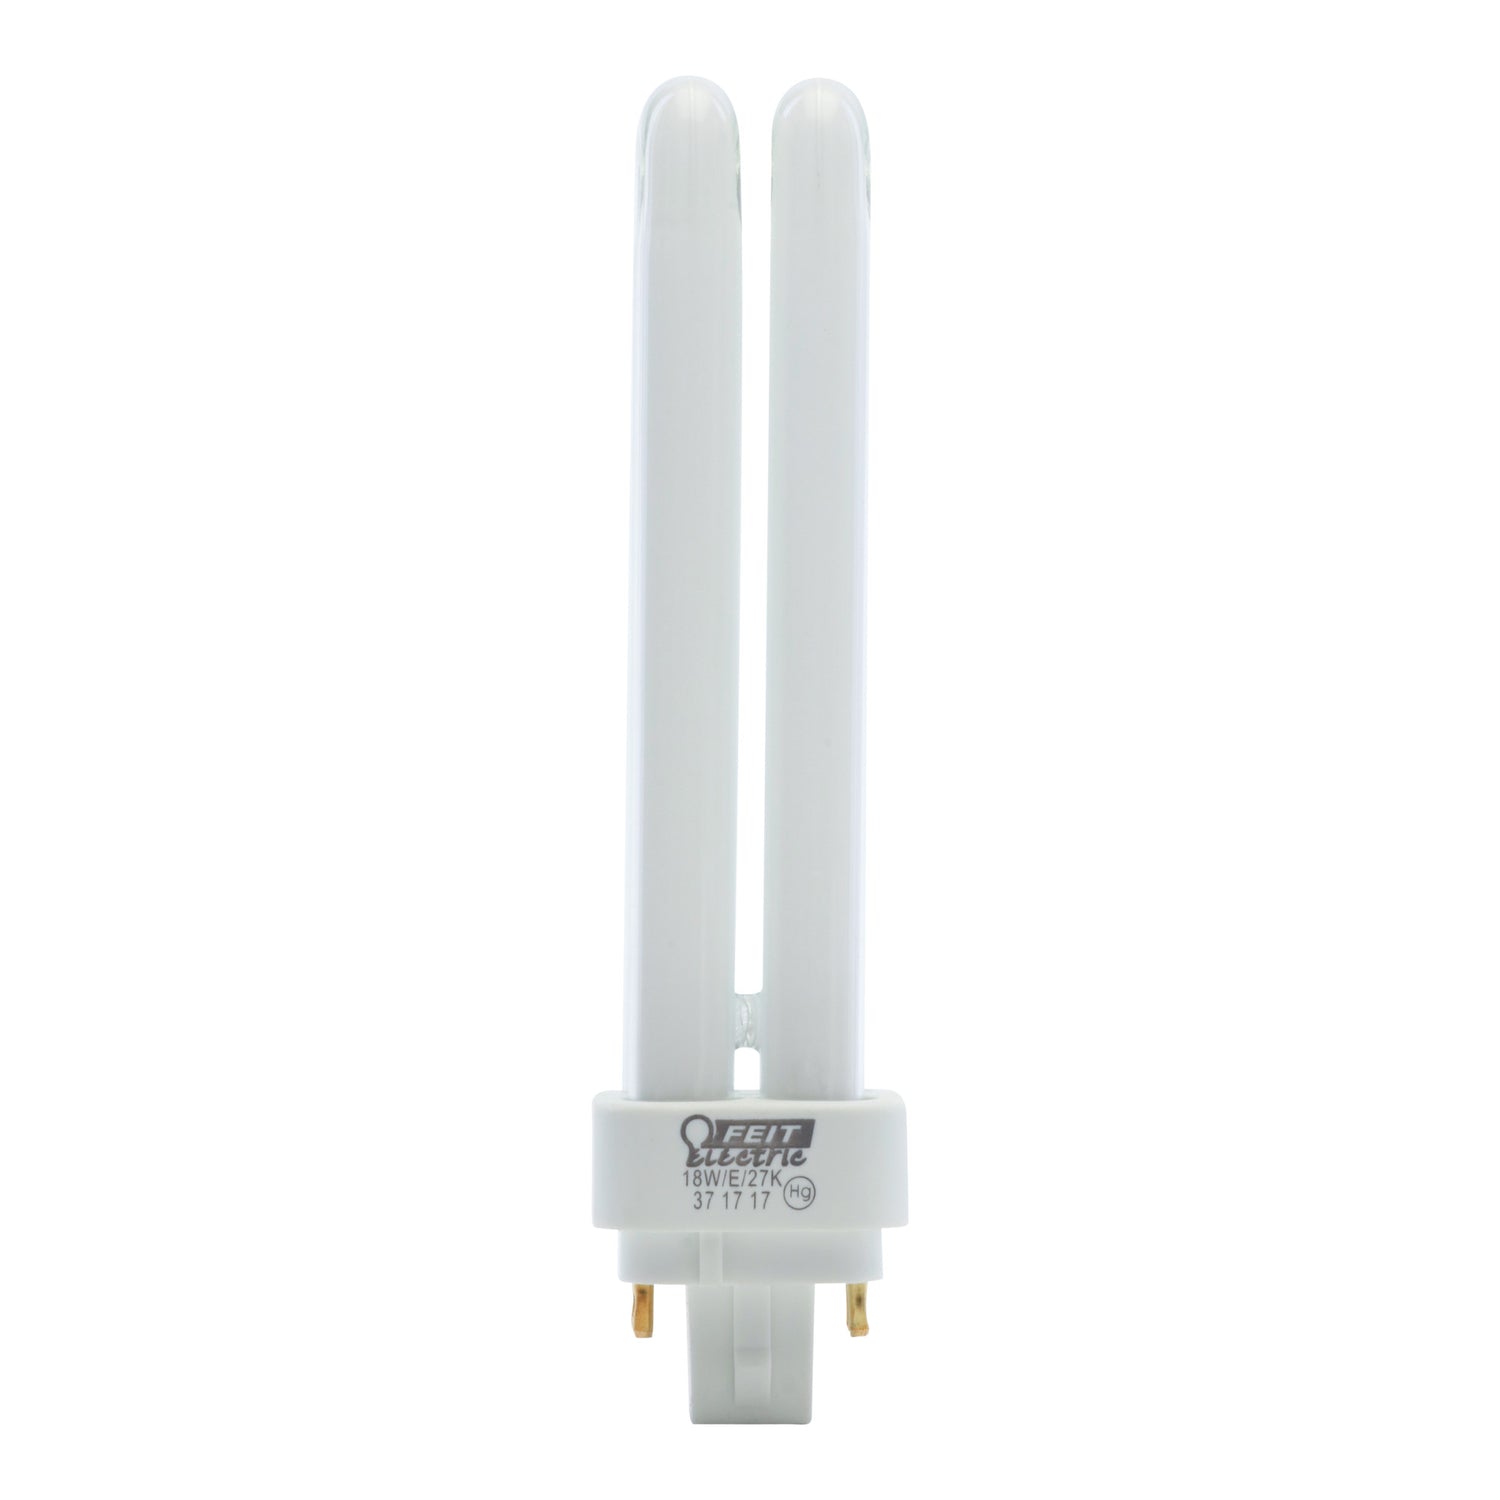 18W Soft White (2700K) G24q-2 Base Double Twin Tube Compact Fluorescent PL Bulb